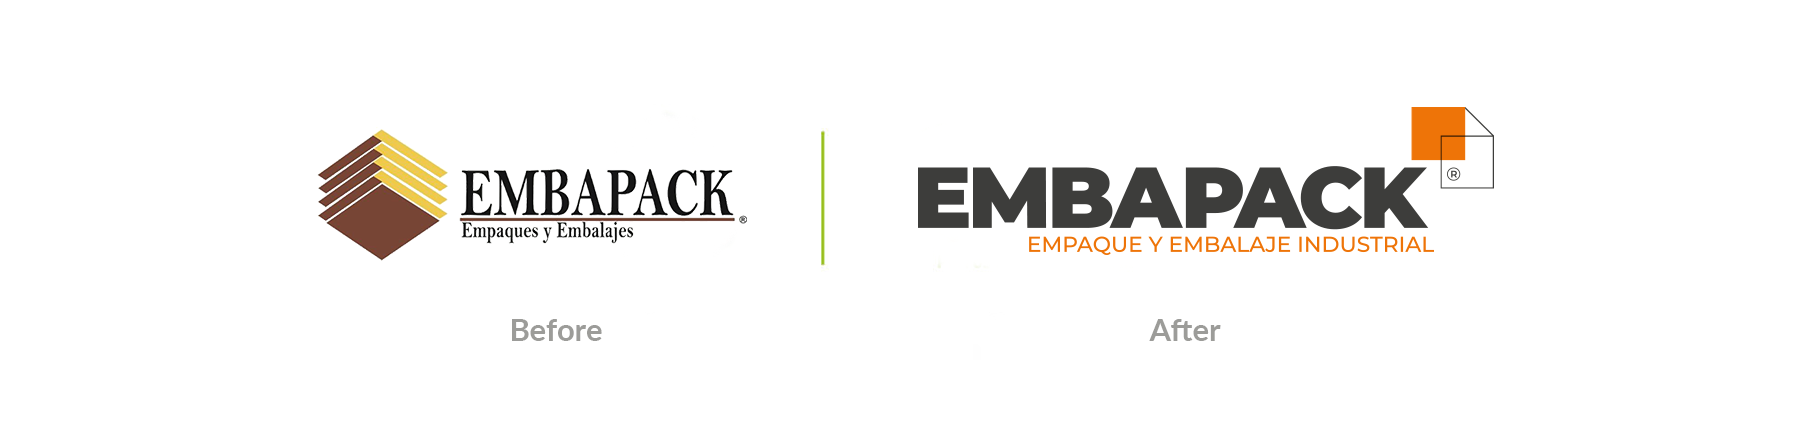 Embapack branding